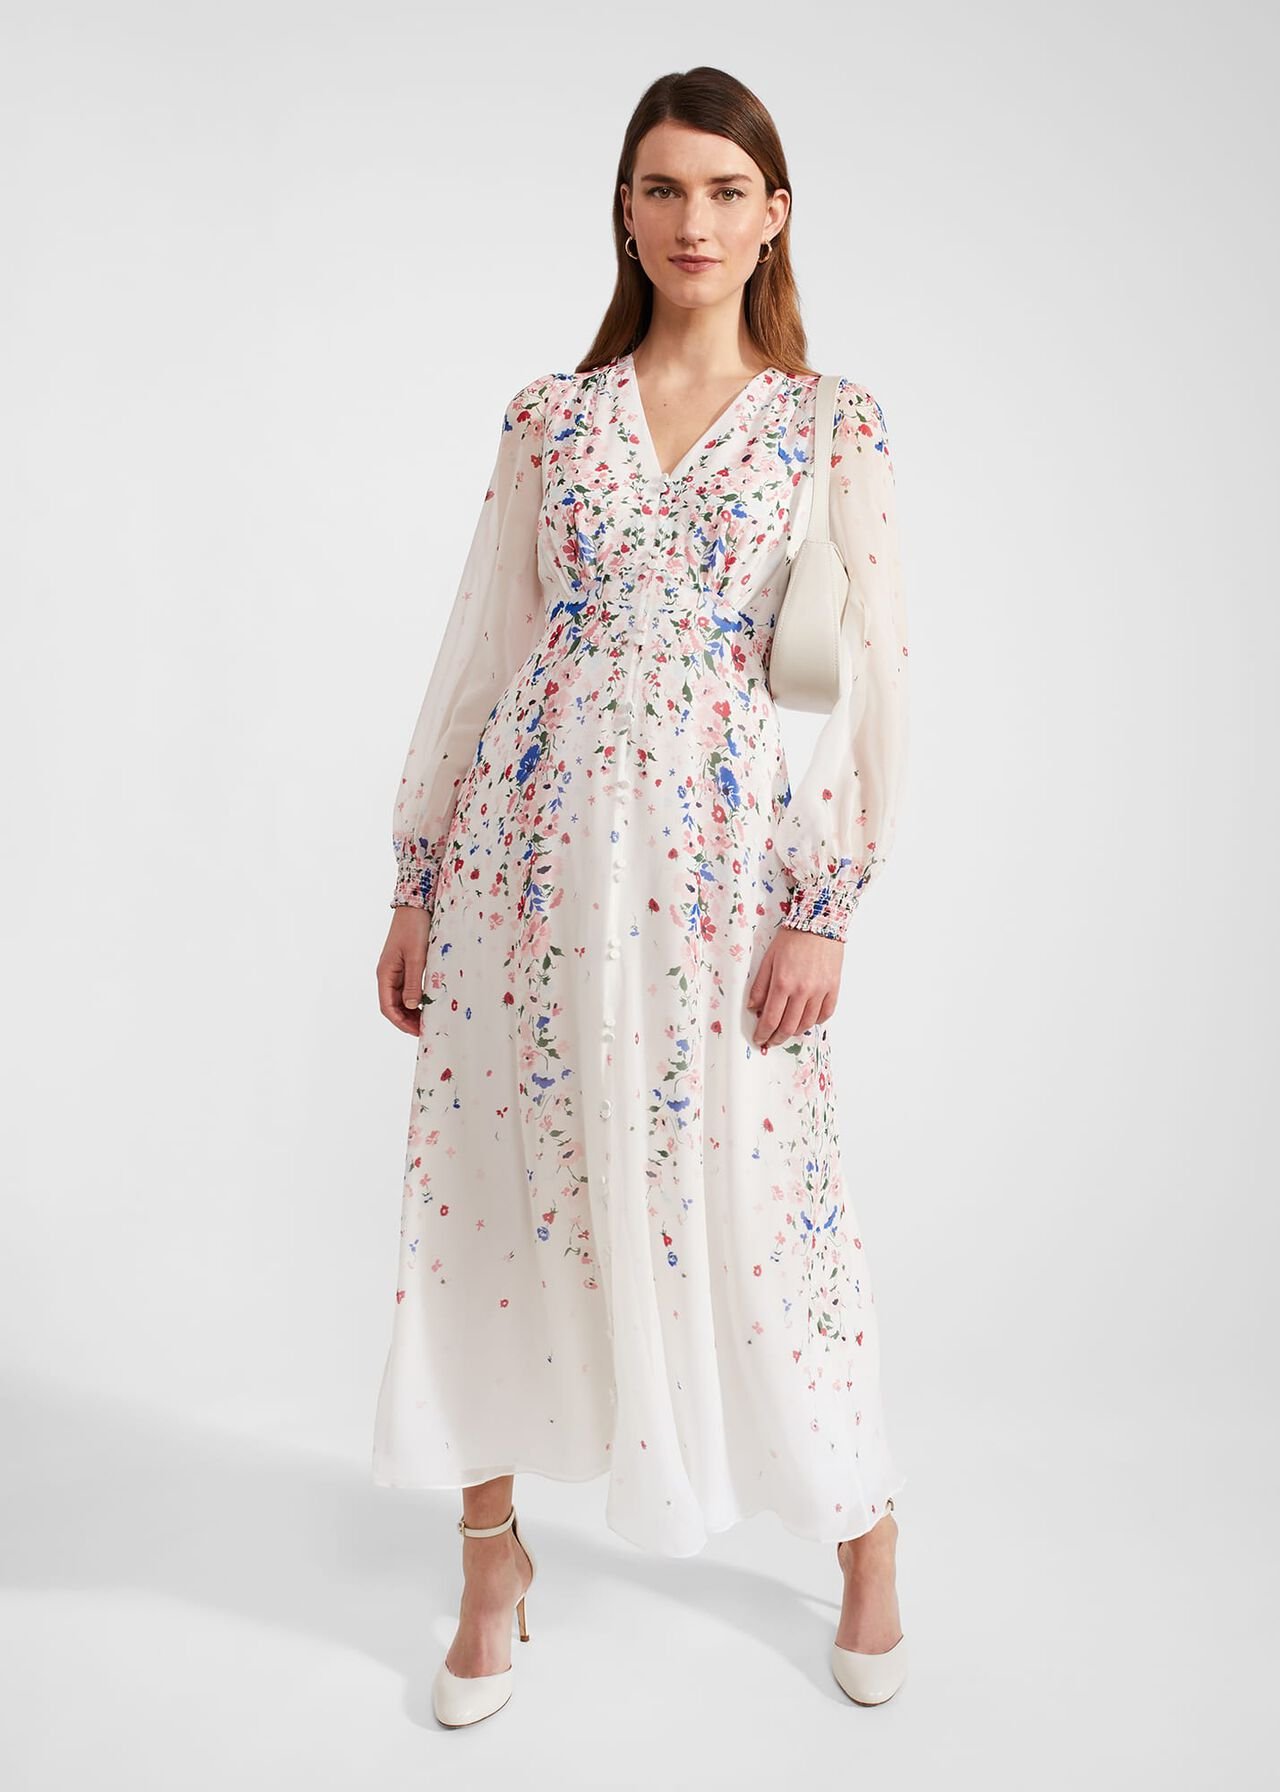 Asher Silk Midi Dress, Ivory Multi, hi-res